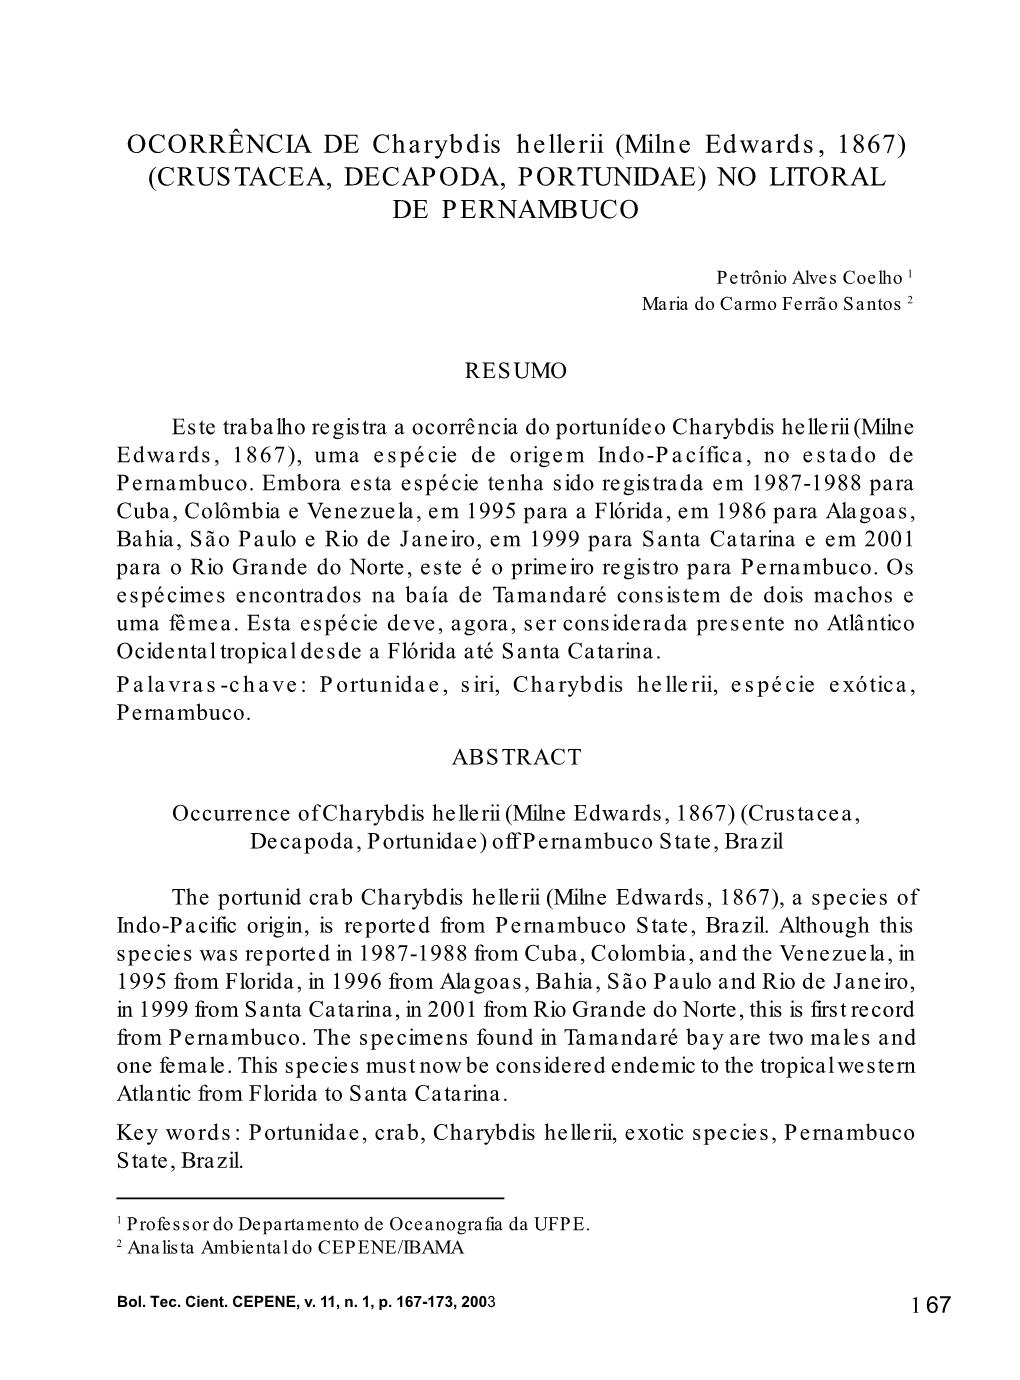 OCORRÊNCIA DE Charybdis Hellerii (Milne Edwards, 1867) (CRUSTACEA, DECAPODA, PORTUNIDAE) NO LITORAL DE PERNAMBUCO